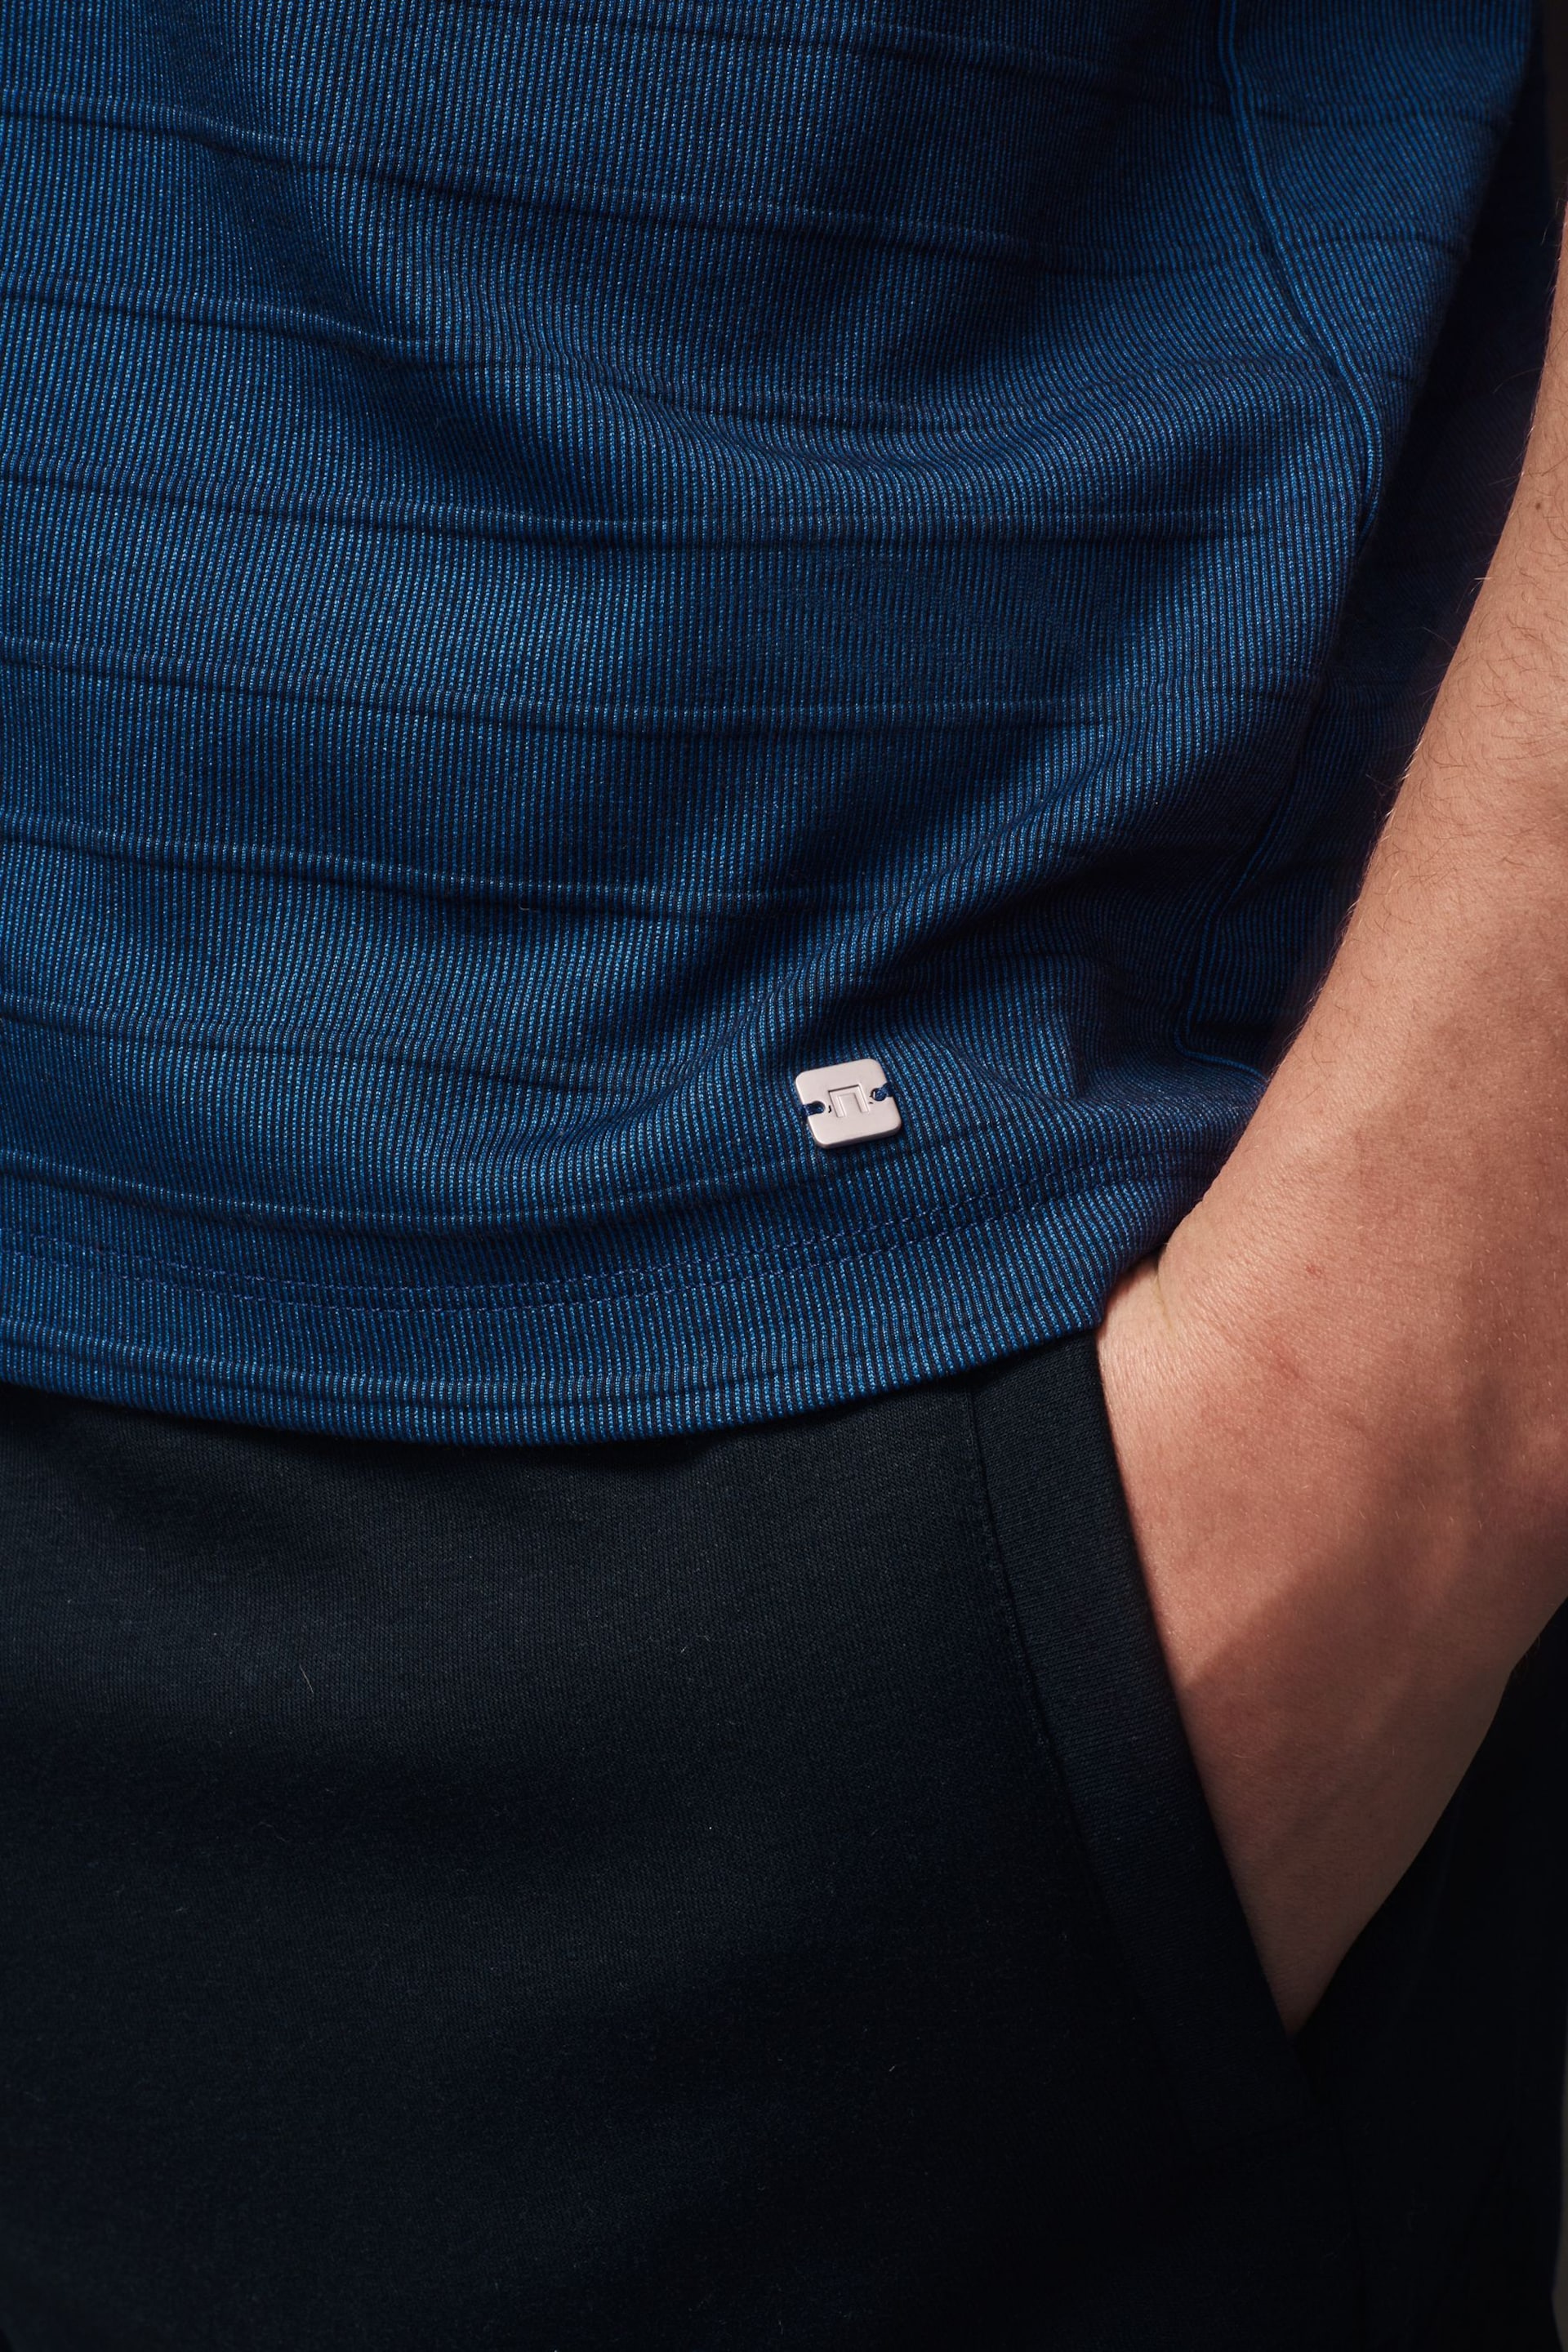 Black/Blue Zip Neck Smart Polo Shirt - Image 6 of 9